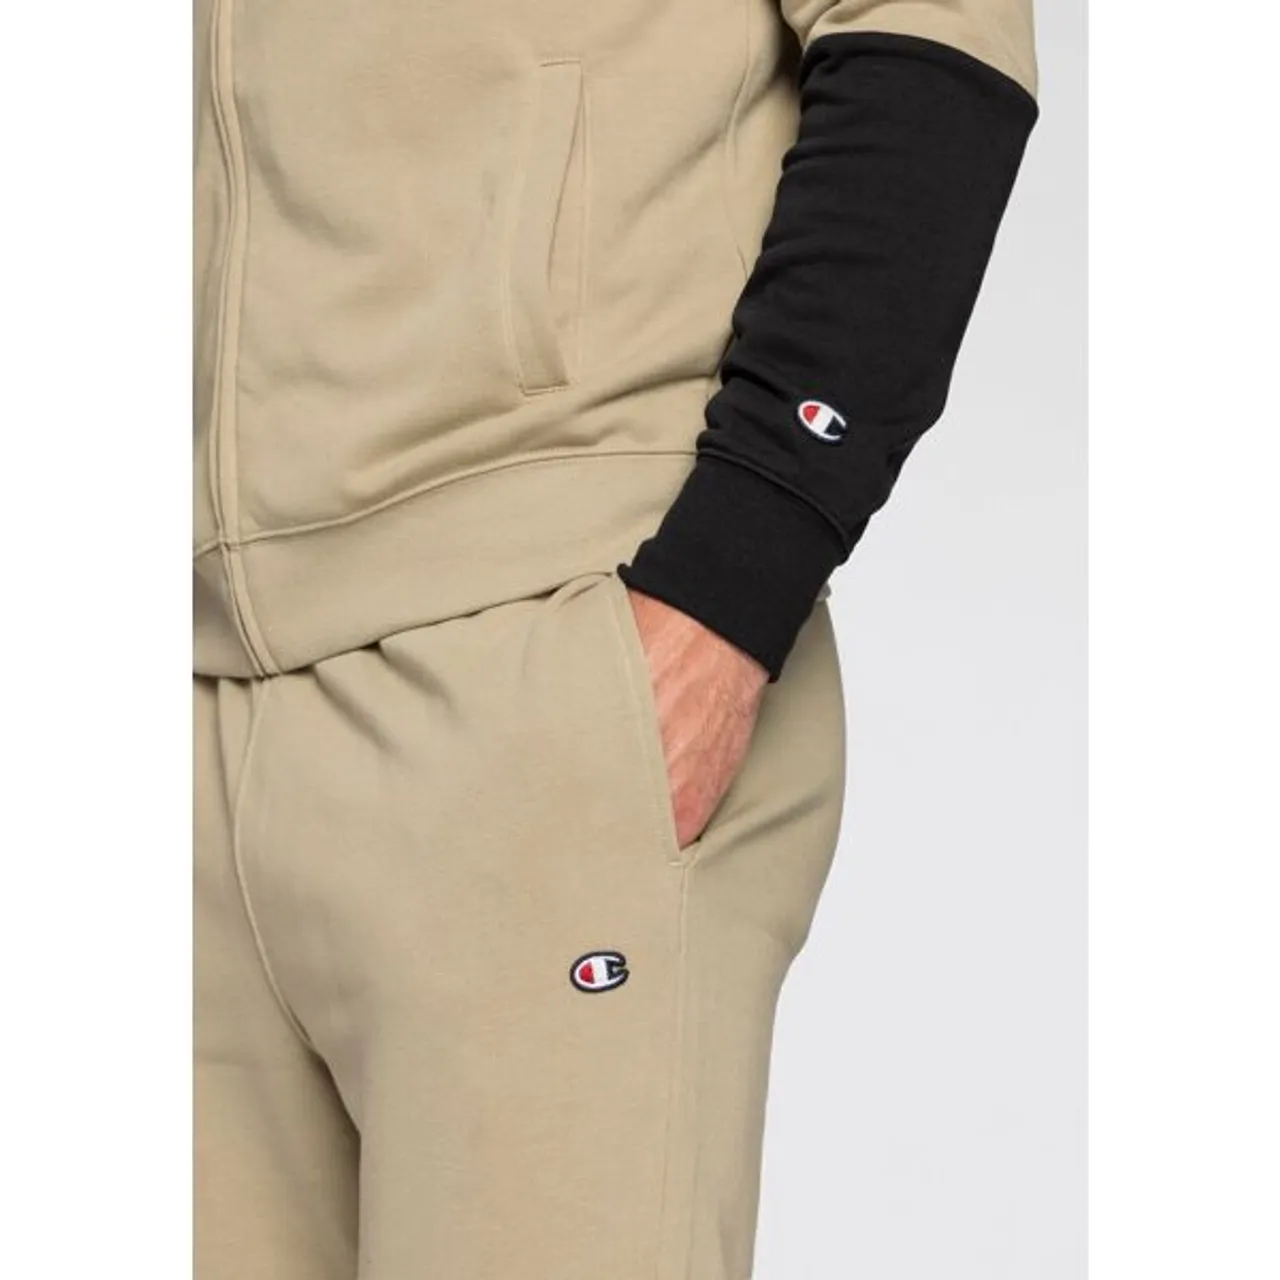 Trainingsanzug CHAMPION "Icons Full Zip Hooded Sweatsuit" Gr. L (50), grün Herren Sportanzüge Trainingsanzüge